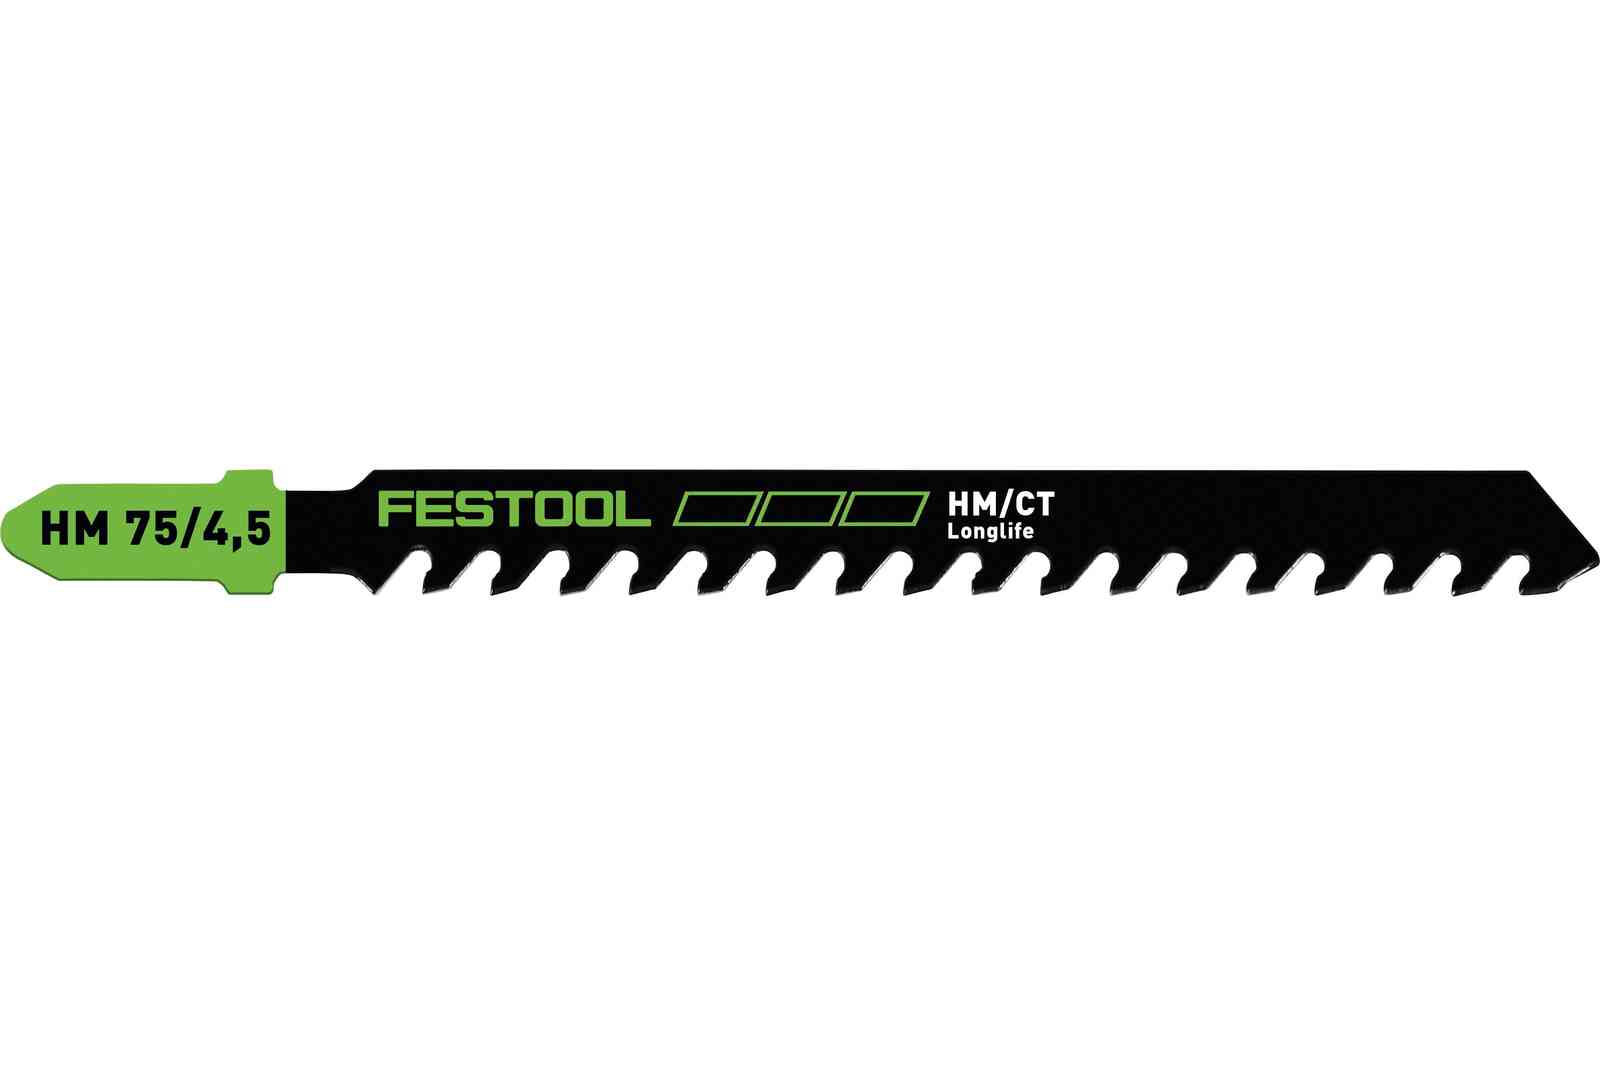 Festool 204343 HM75/4.5/1 Jigsaw Blade (Building Materials-Abrasive Materials) 1-pack